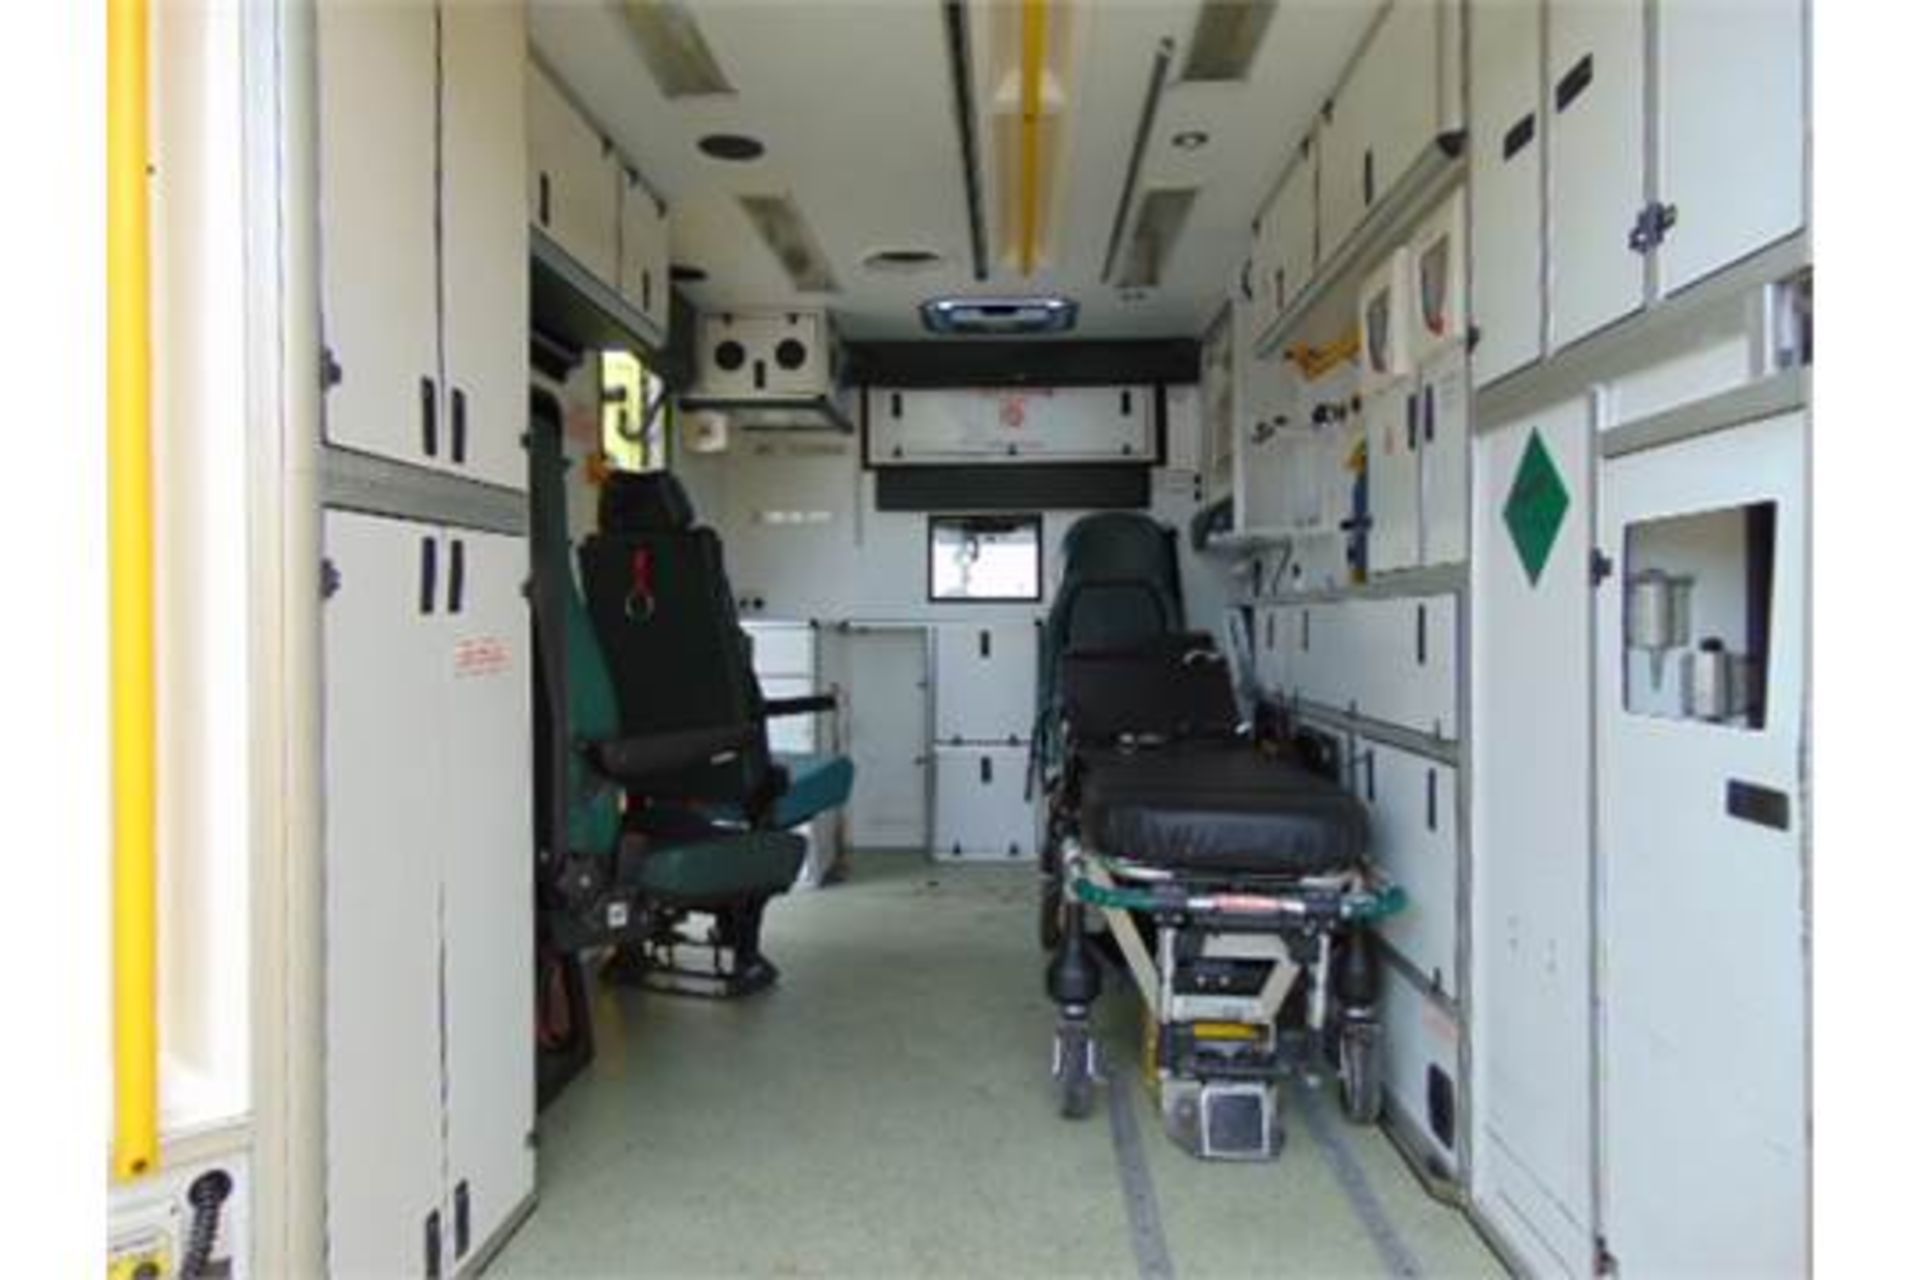 Mercedes Sprinter 515 CDI Turbo diesel ambulance - Image 12 of 21